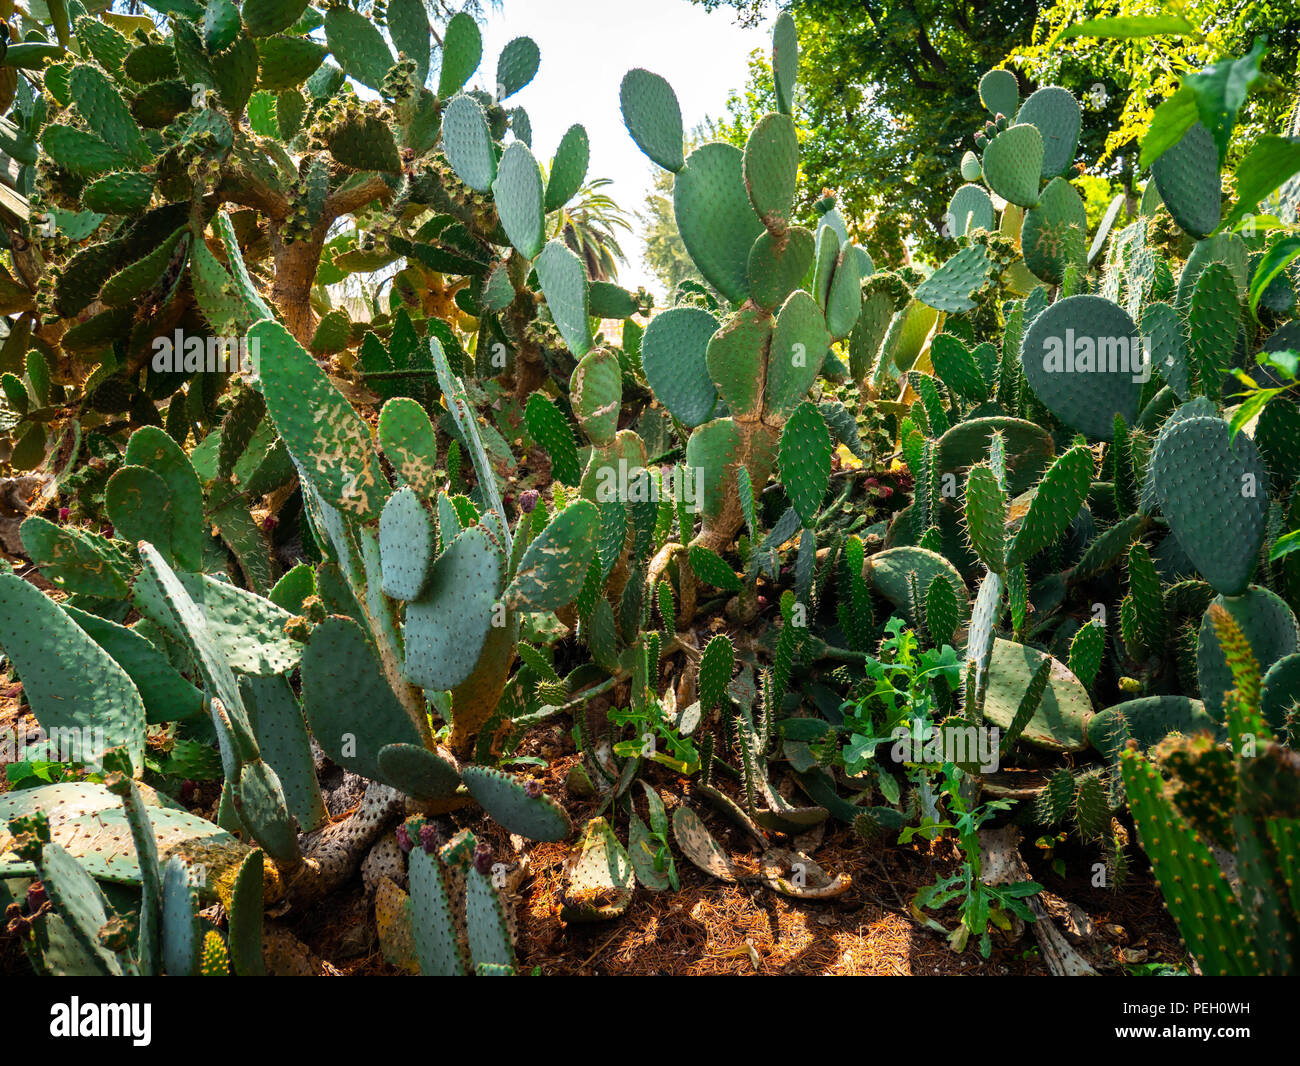 Prickly cactus succulents in a botanical garden Stock Photo